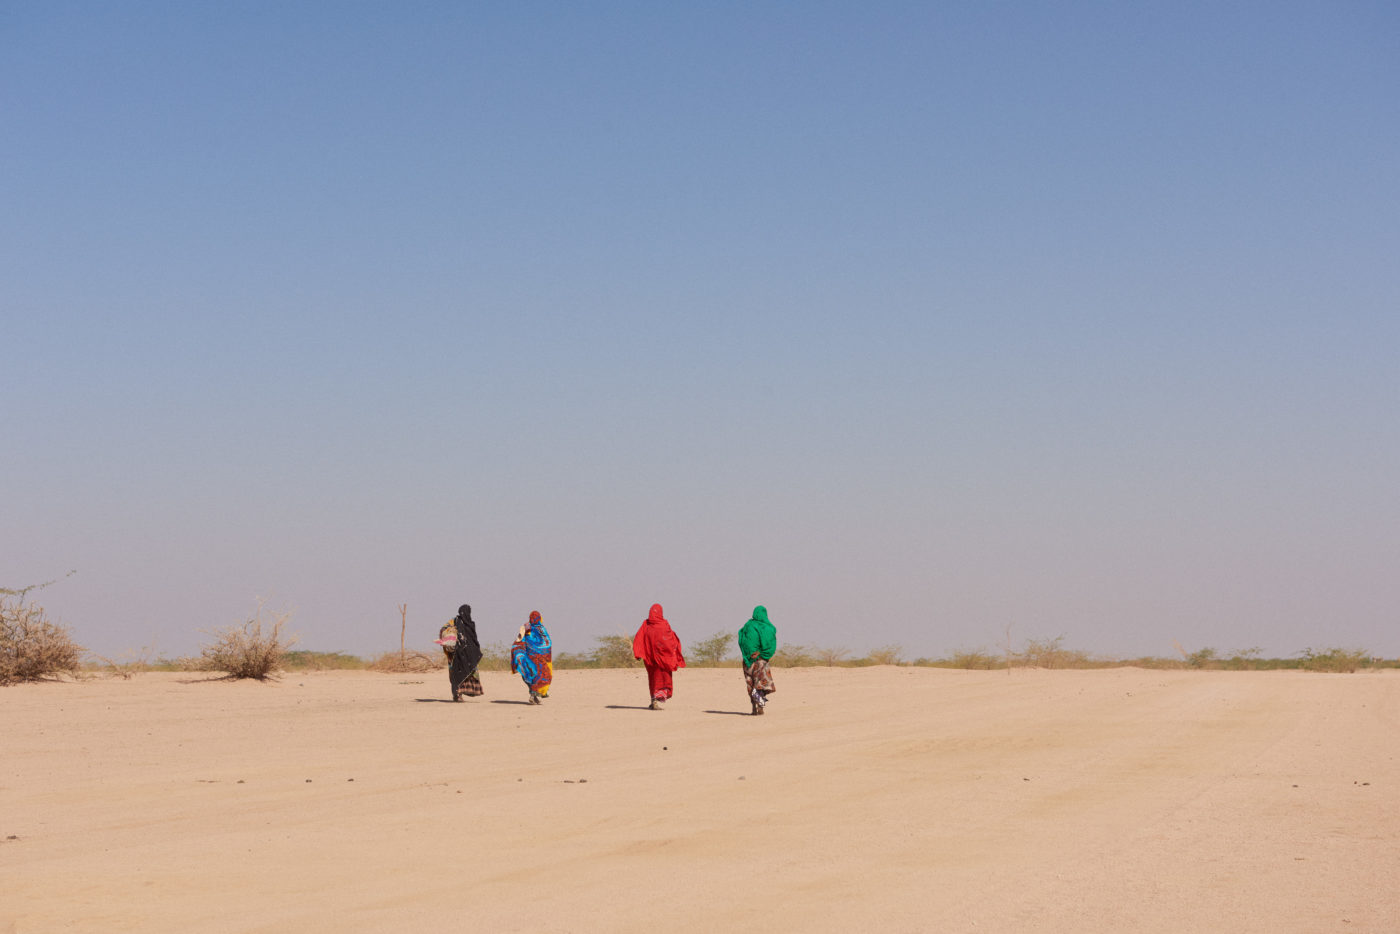 Women walking away on sand